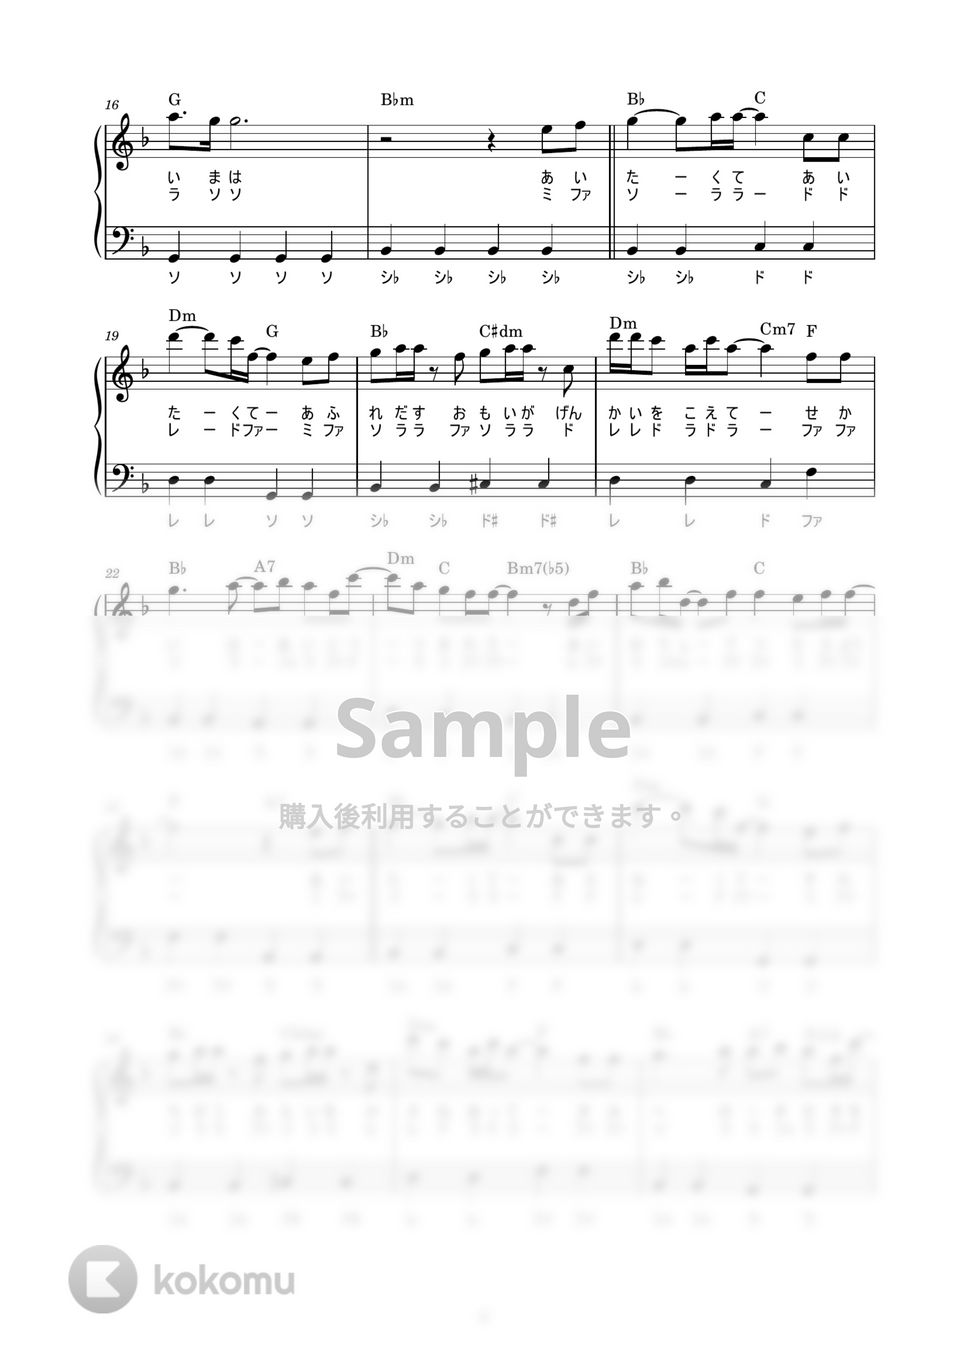 Ado - 会いたくて (かんたん / 歌詞付き / ドレミ付き / 初心者) by piano.tokyo